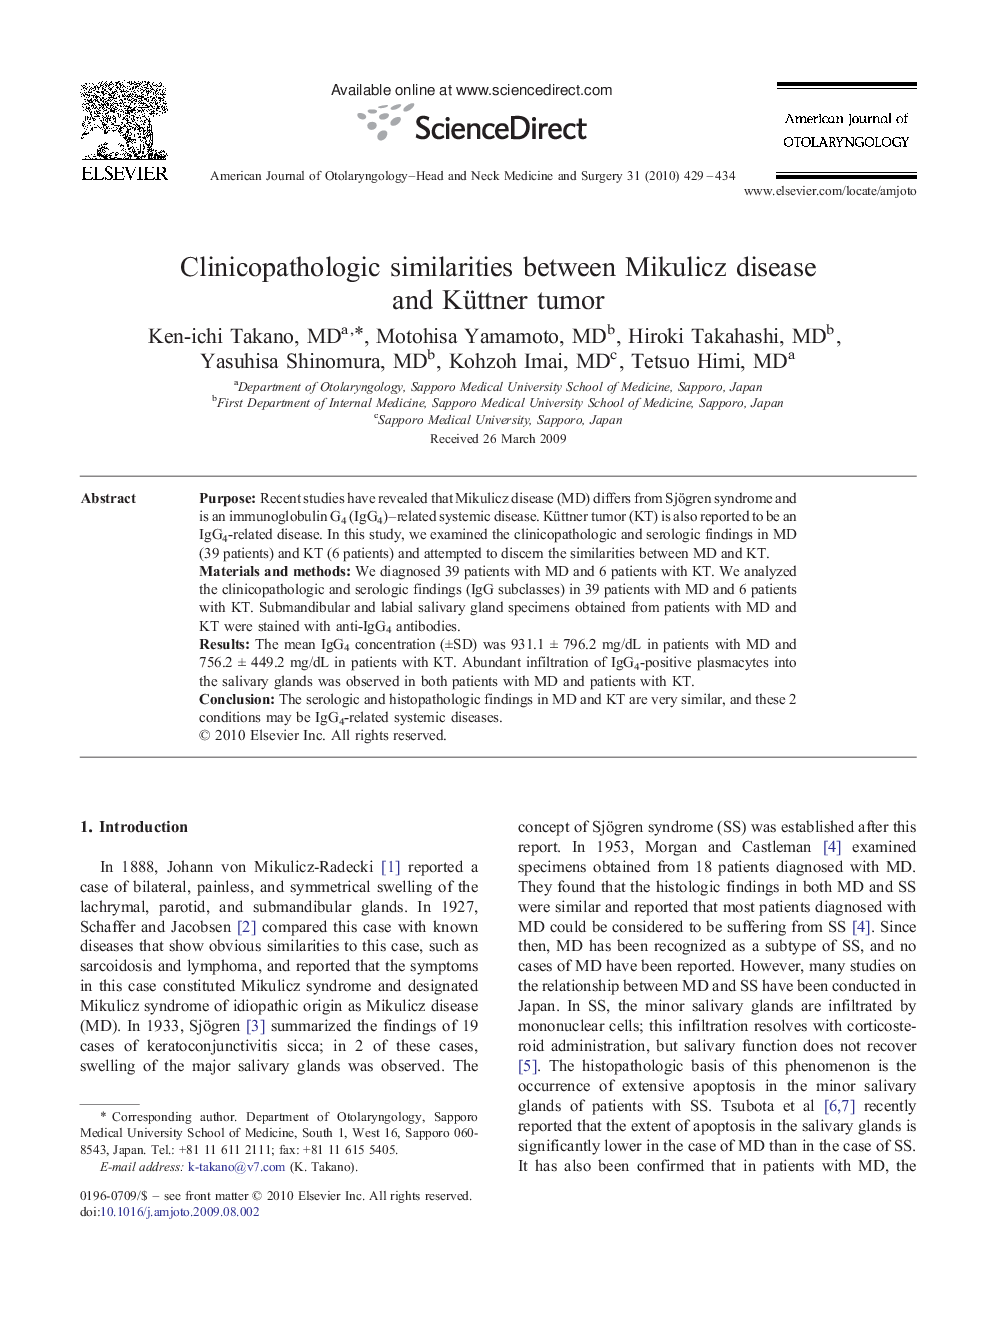 Clinicopathologic similarities between Mikulicz disease and Küttner tumor